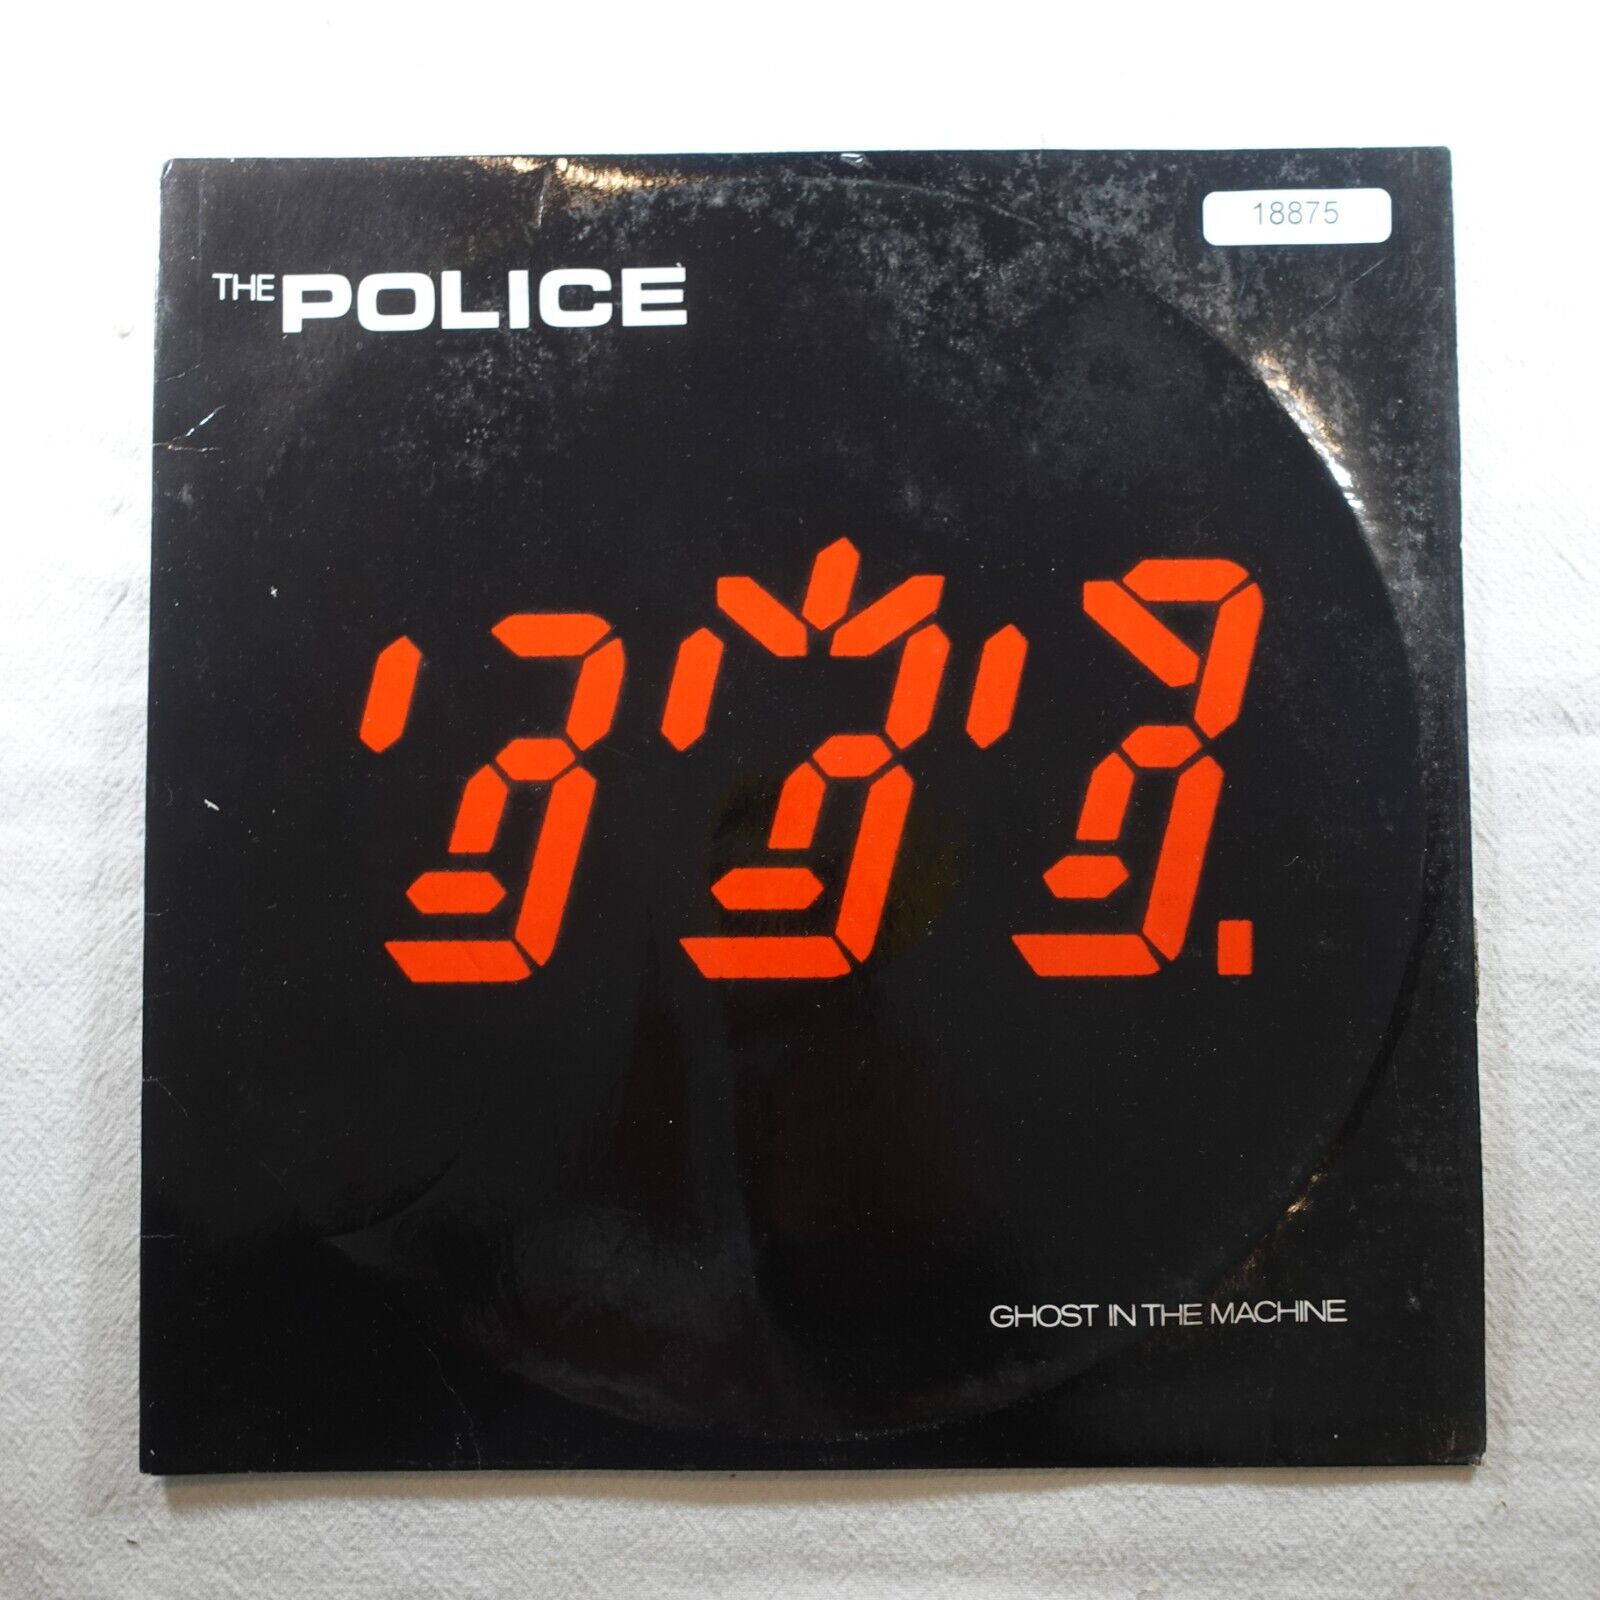 The Police Ghost In The Machine   Record Album Vinyl LP